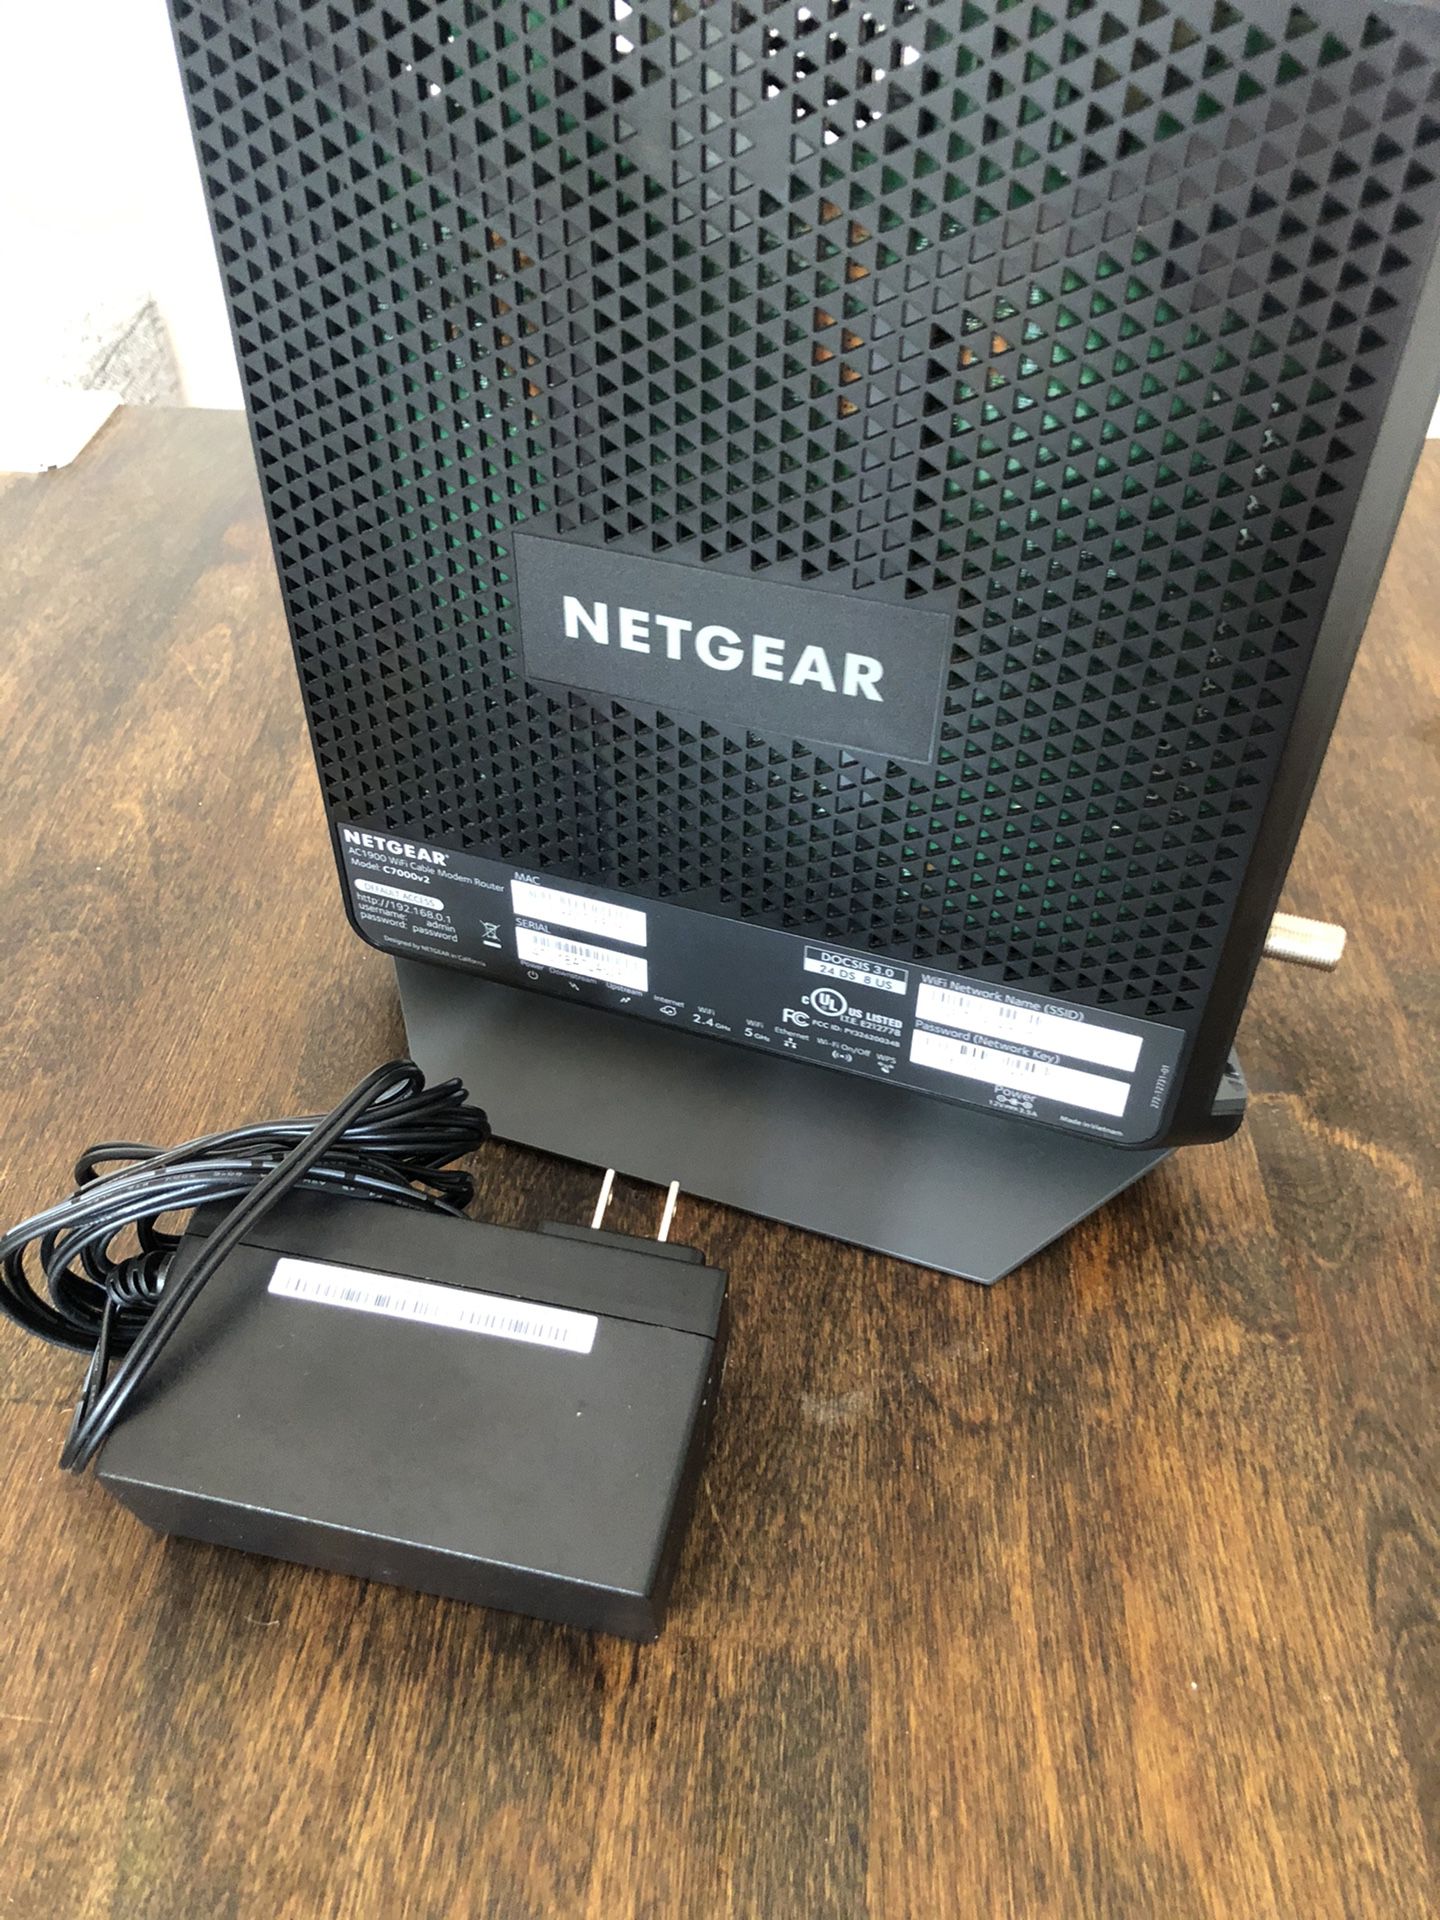 Netgear Nighthawk Cable Modem Router Combo